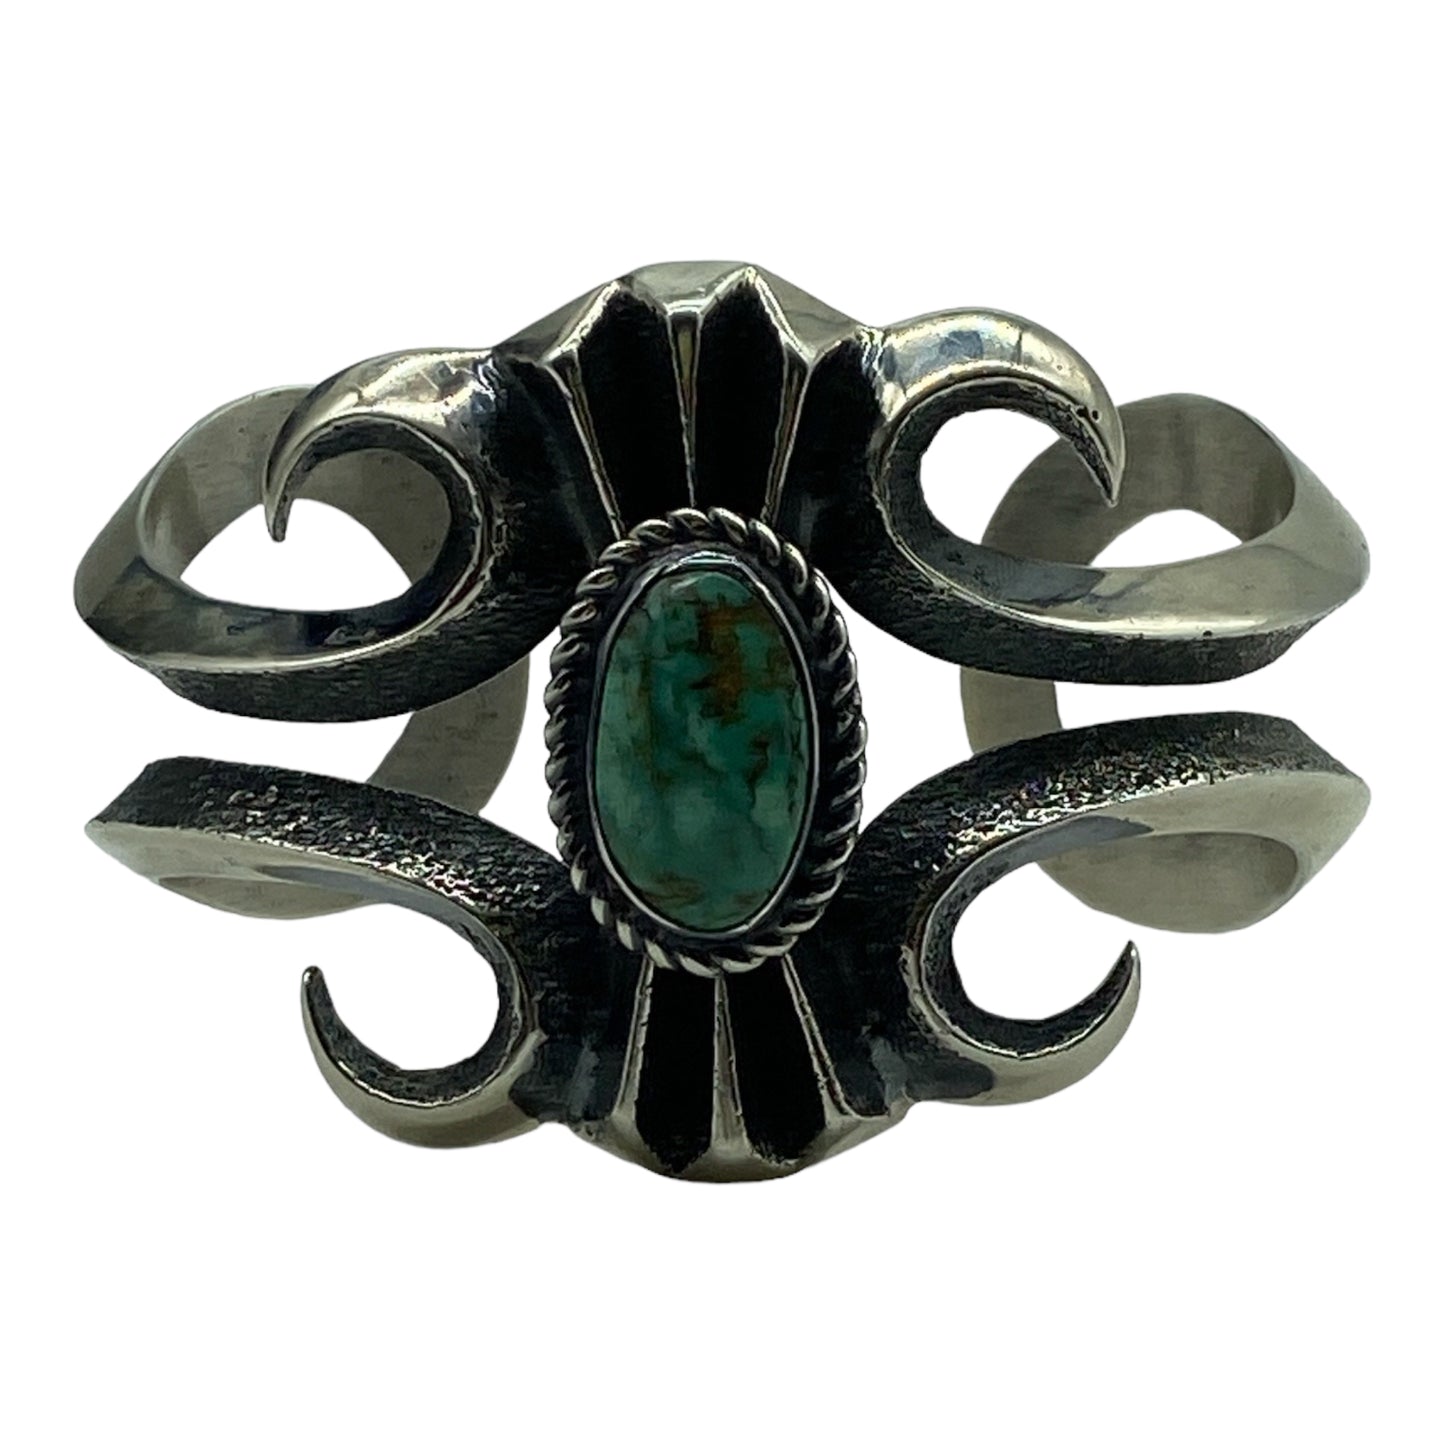 Turquoise and silver Navajo bracelet, Telluride, Colorado